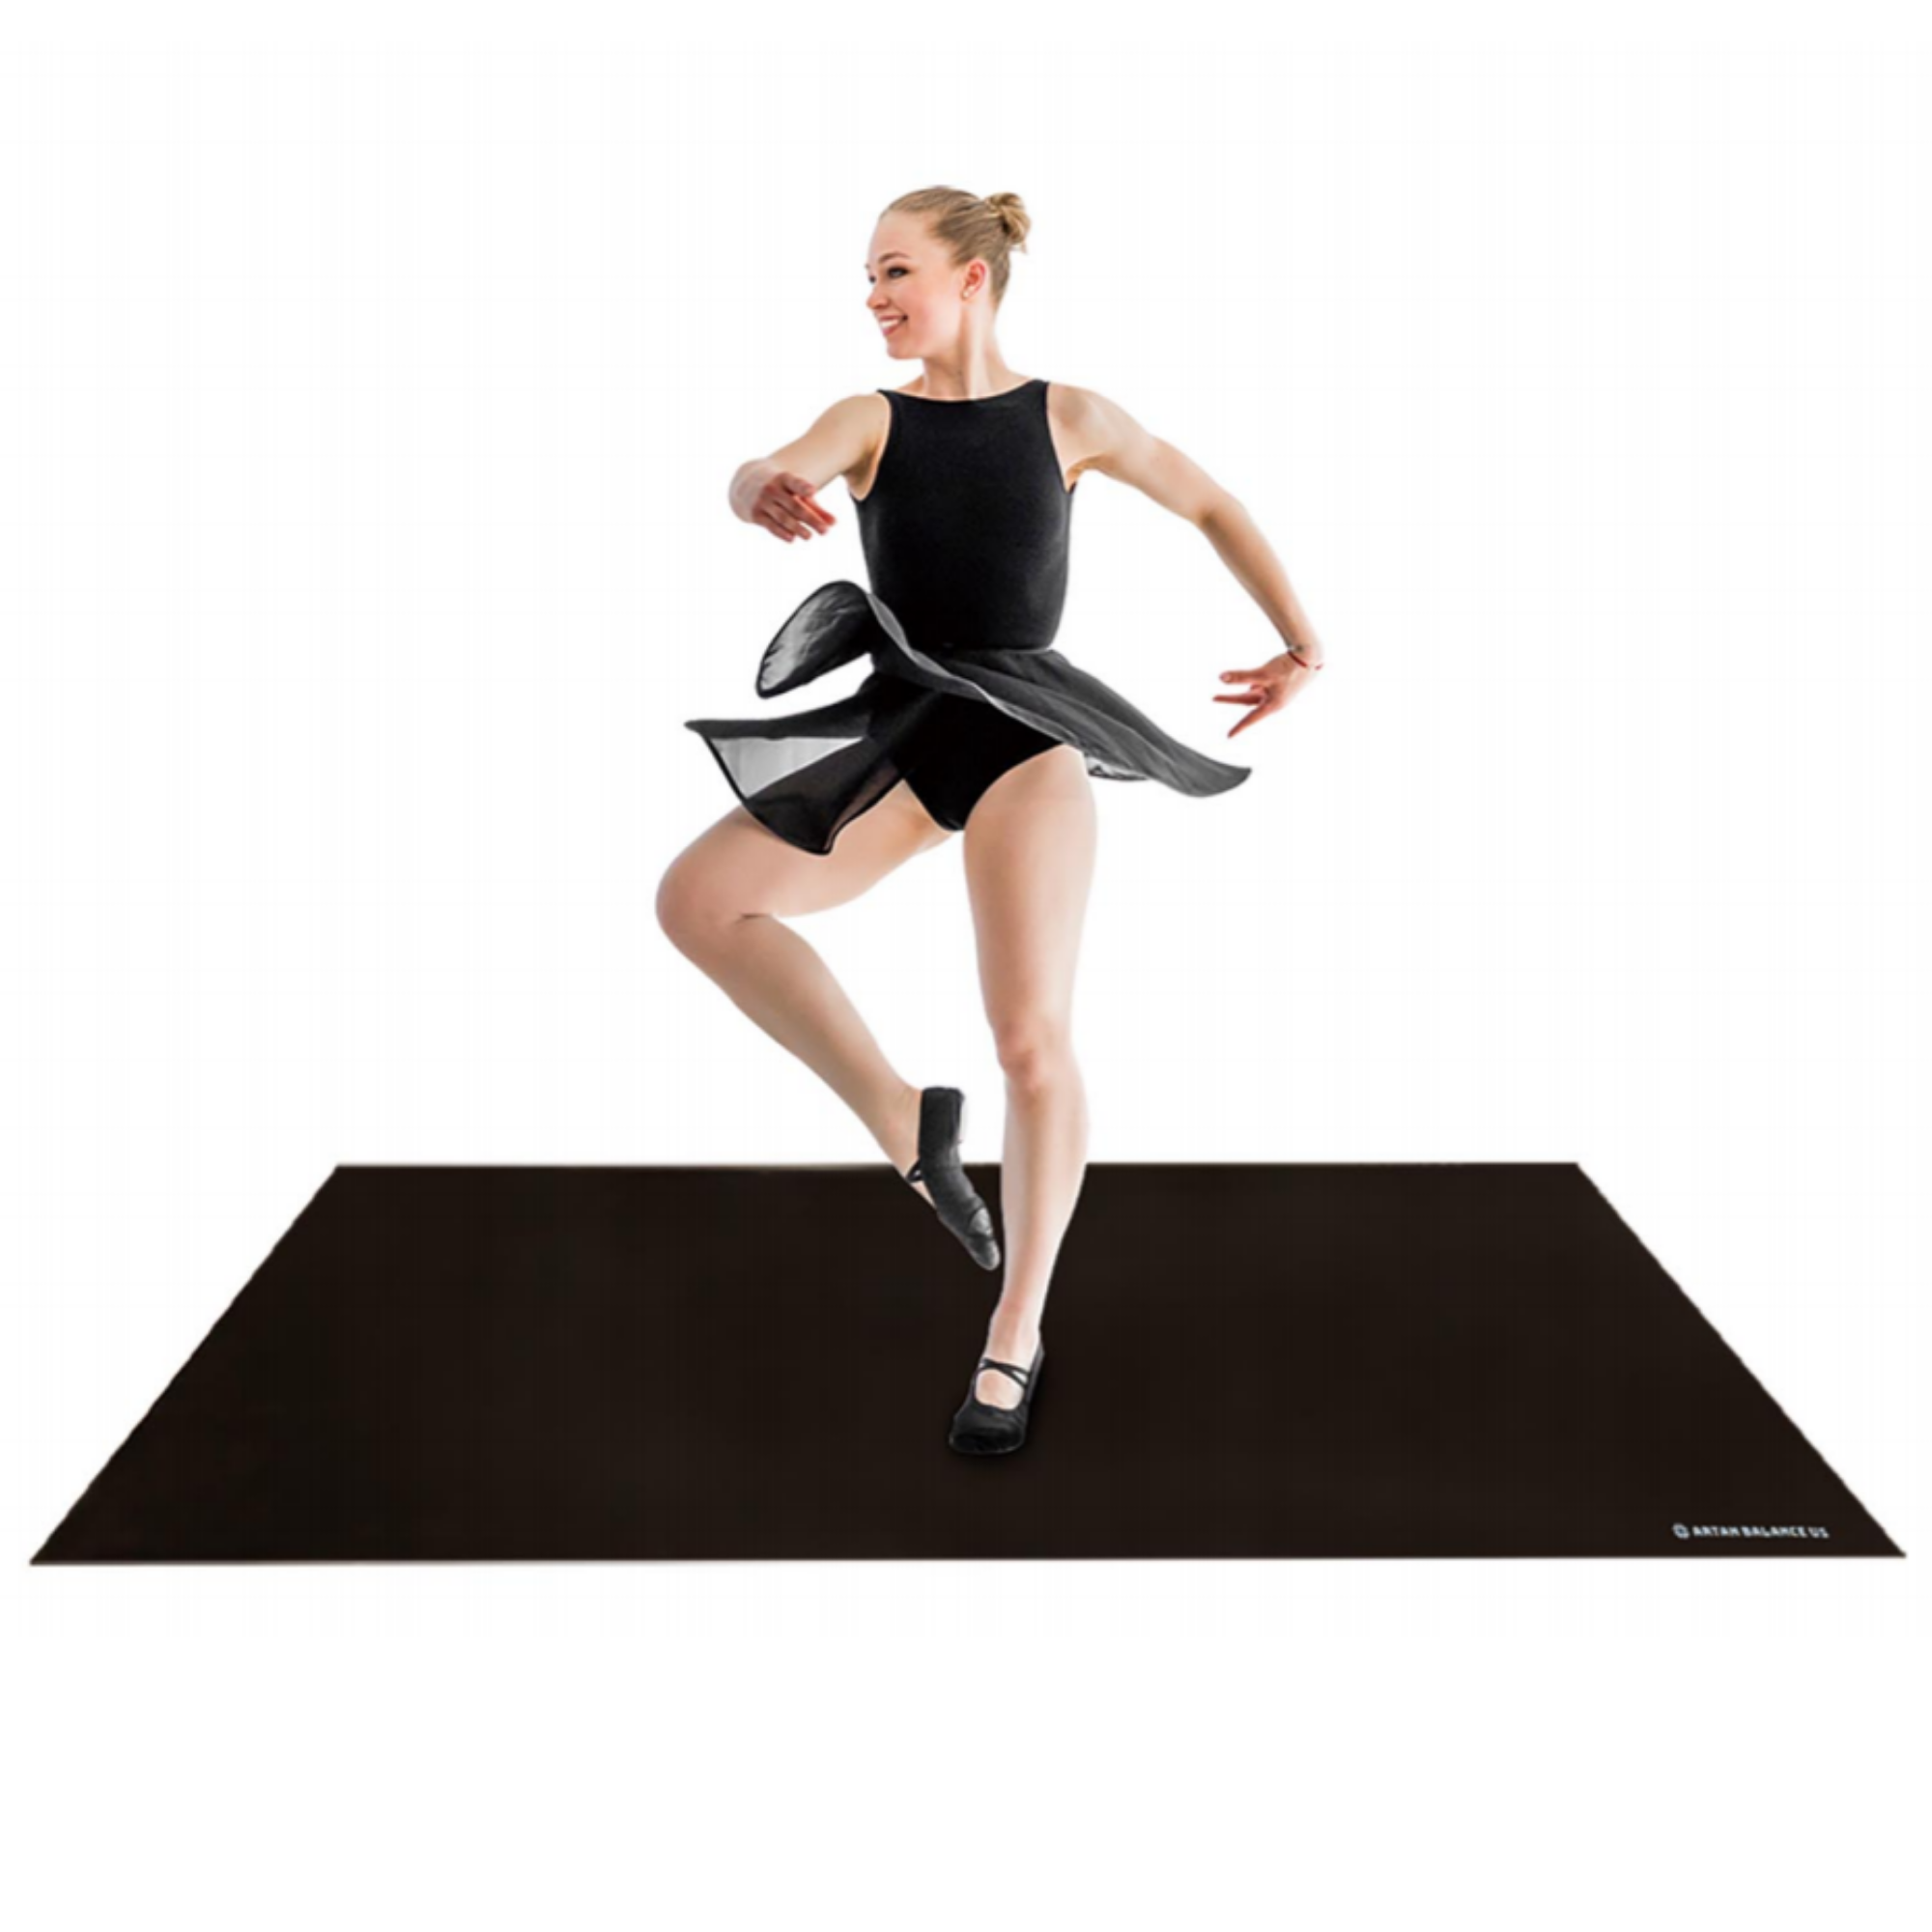 Artan Balance Reversible Marley Dance Floor for Home or Studio – ArtAn  Ballet